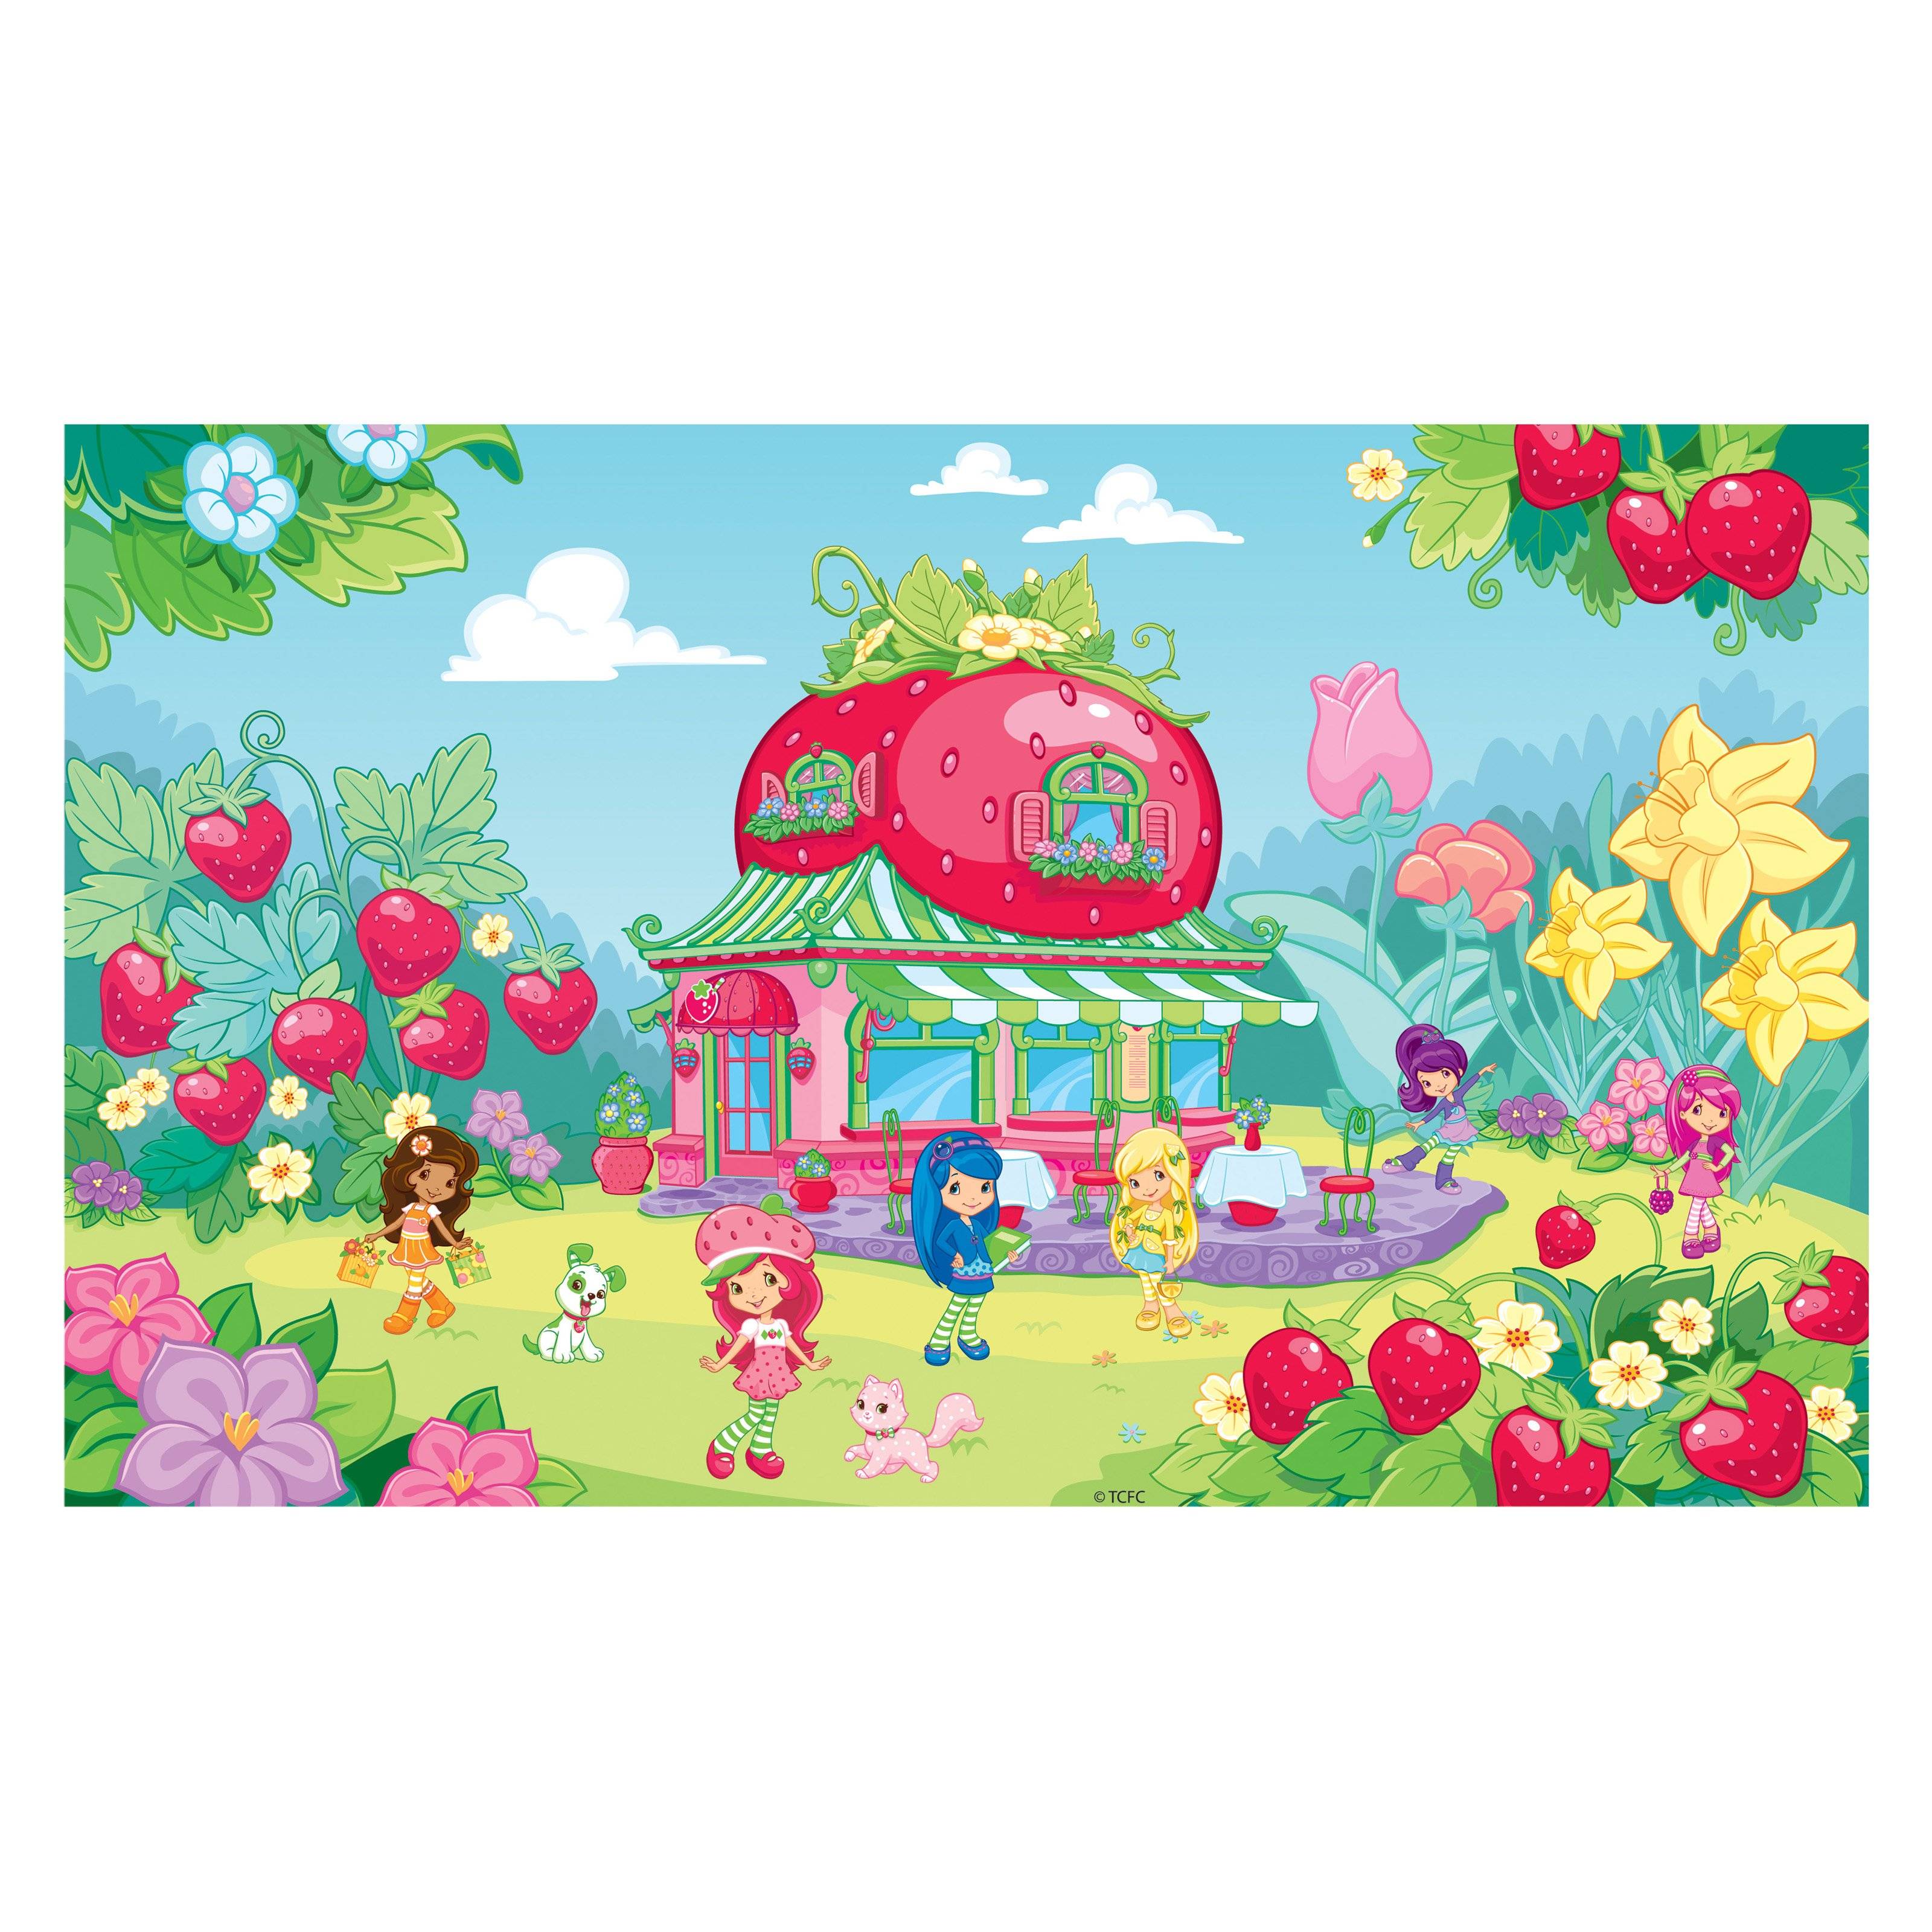 Strawberry shortcake wallpaper by Chucho76  Download on ZEDGE  50f7